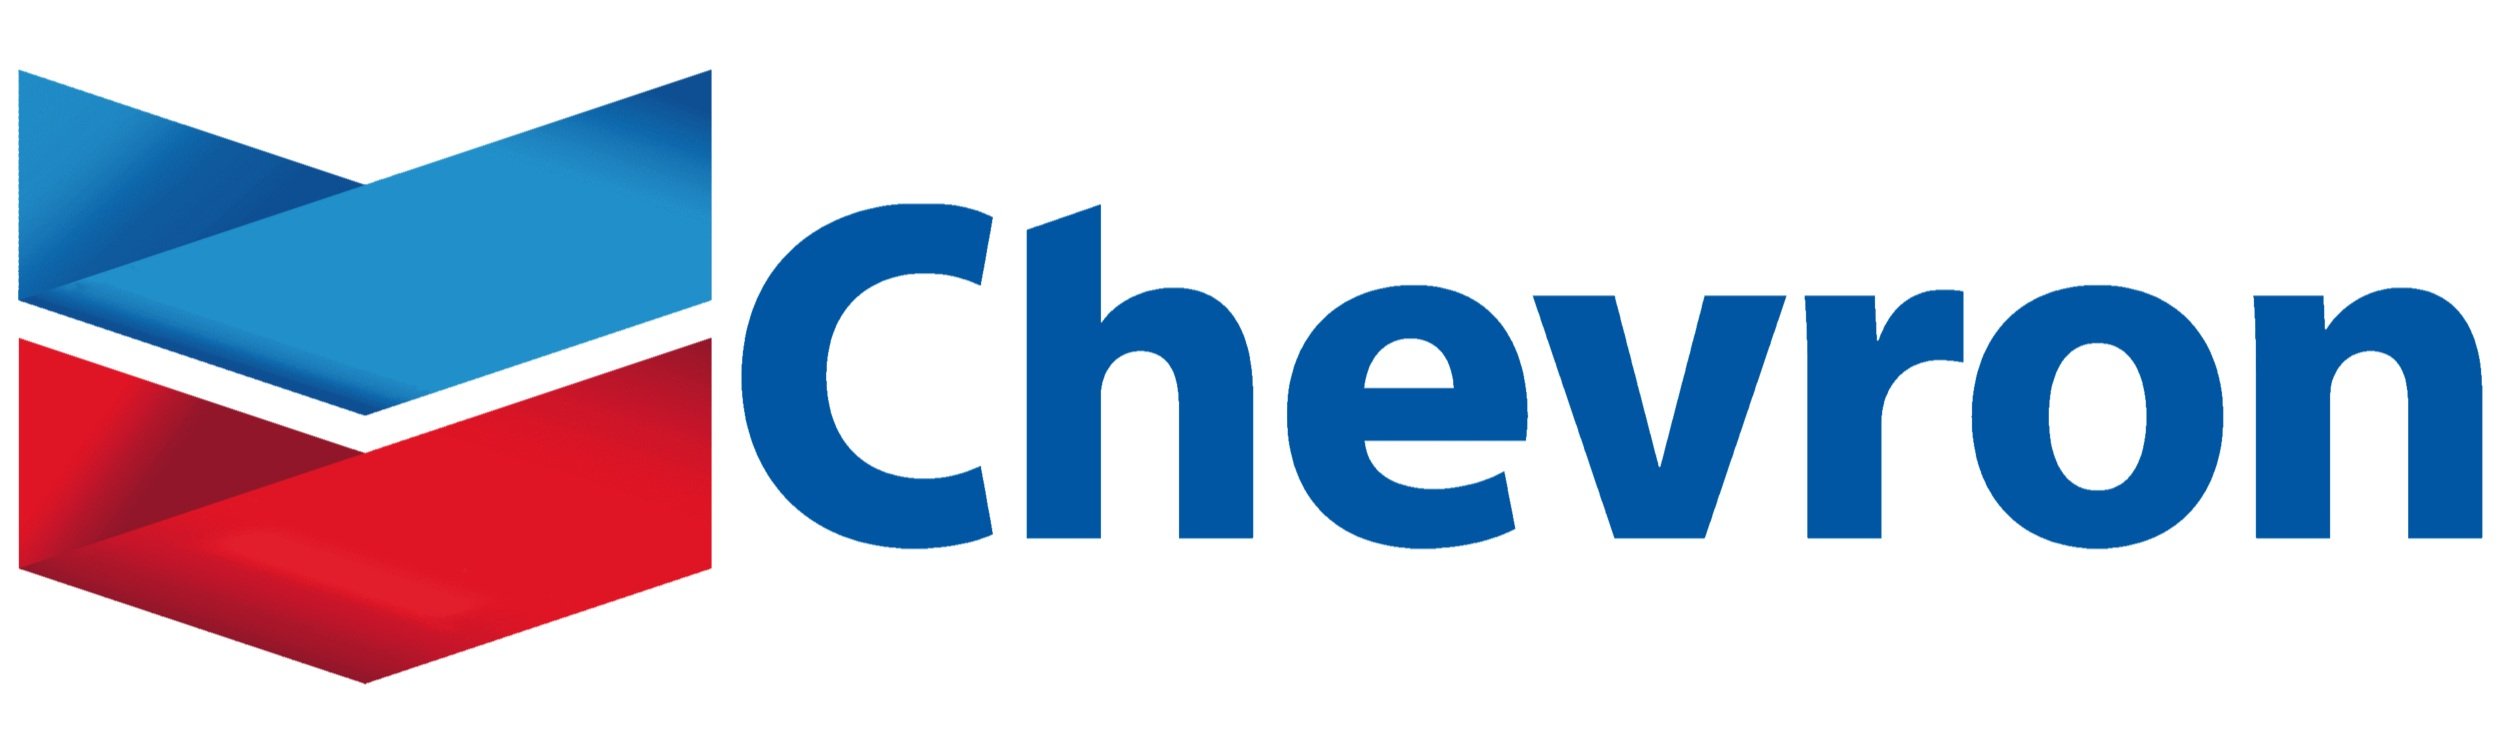 Chevron-Symbol.jpg